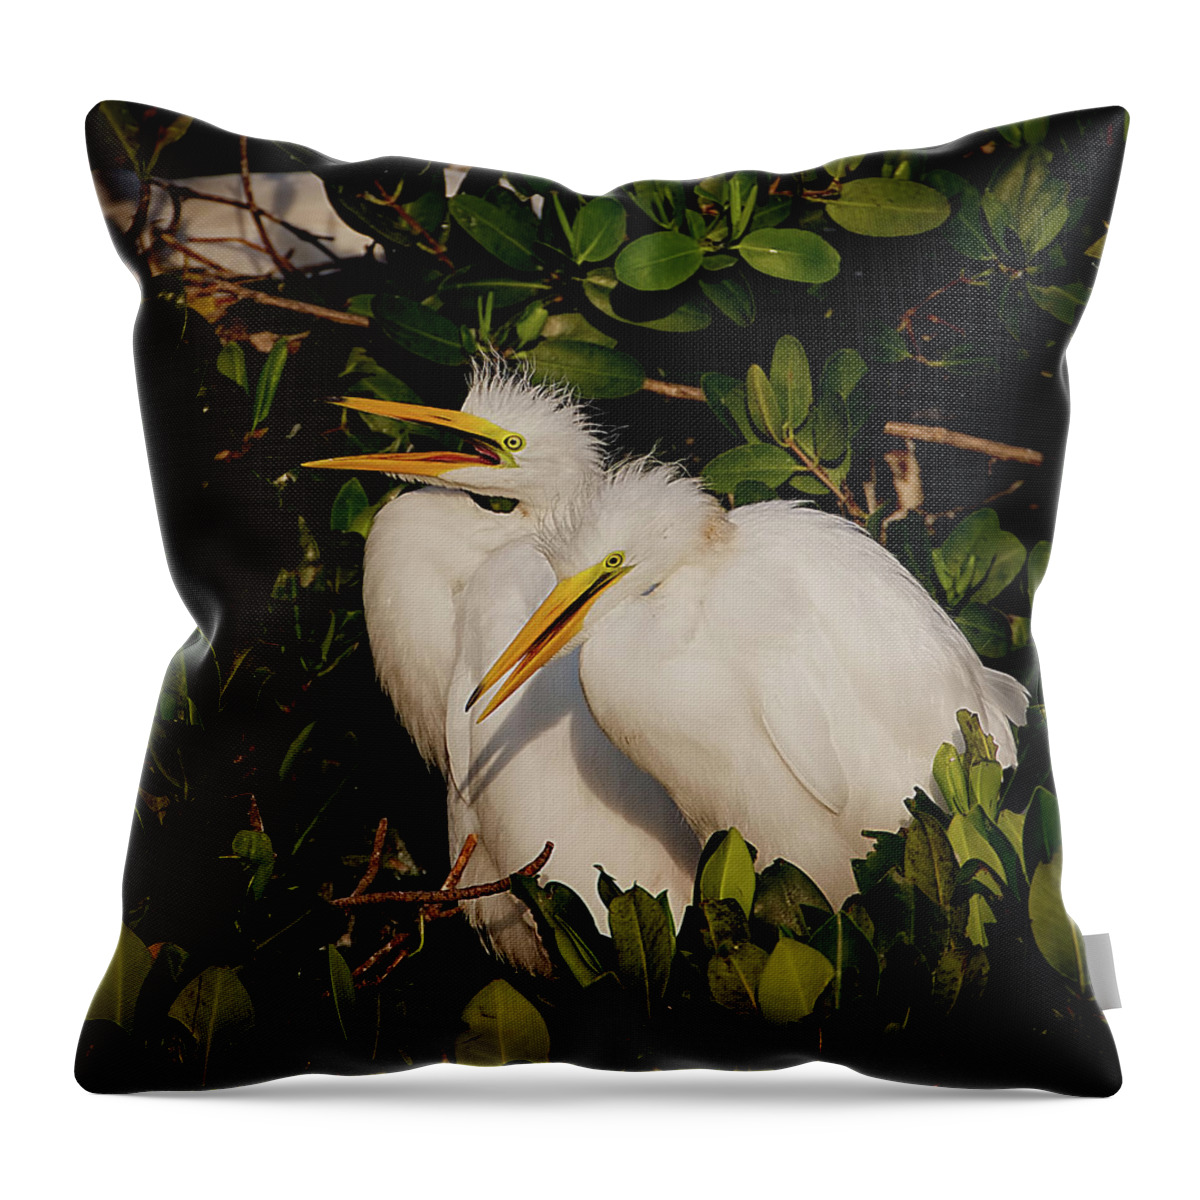 Bird Throw Pillow featuring the photograph Great Egret Chicks by Richard Goldman